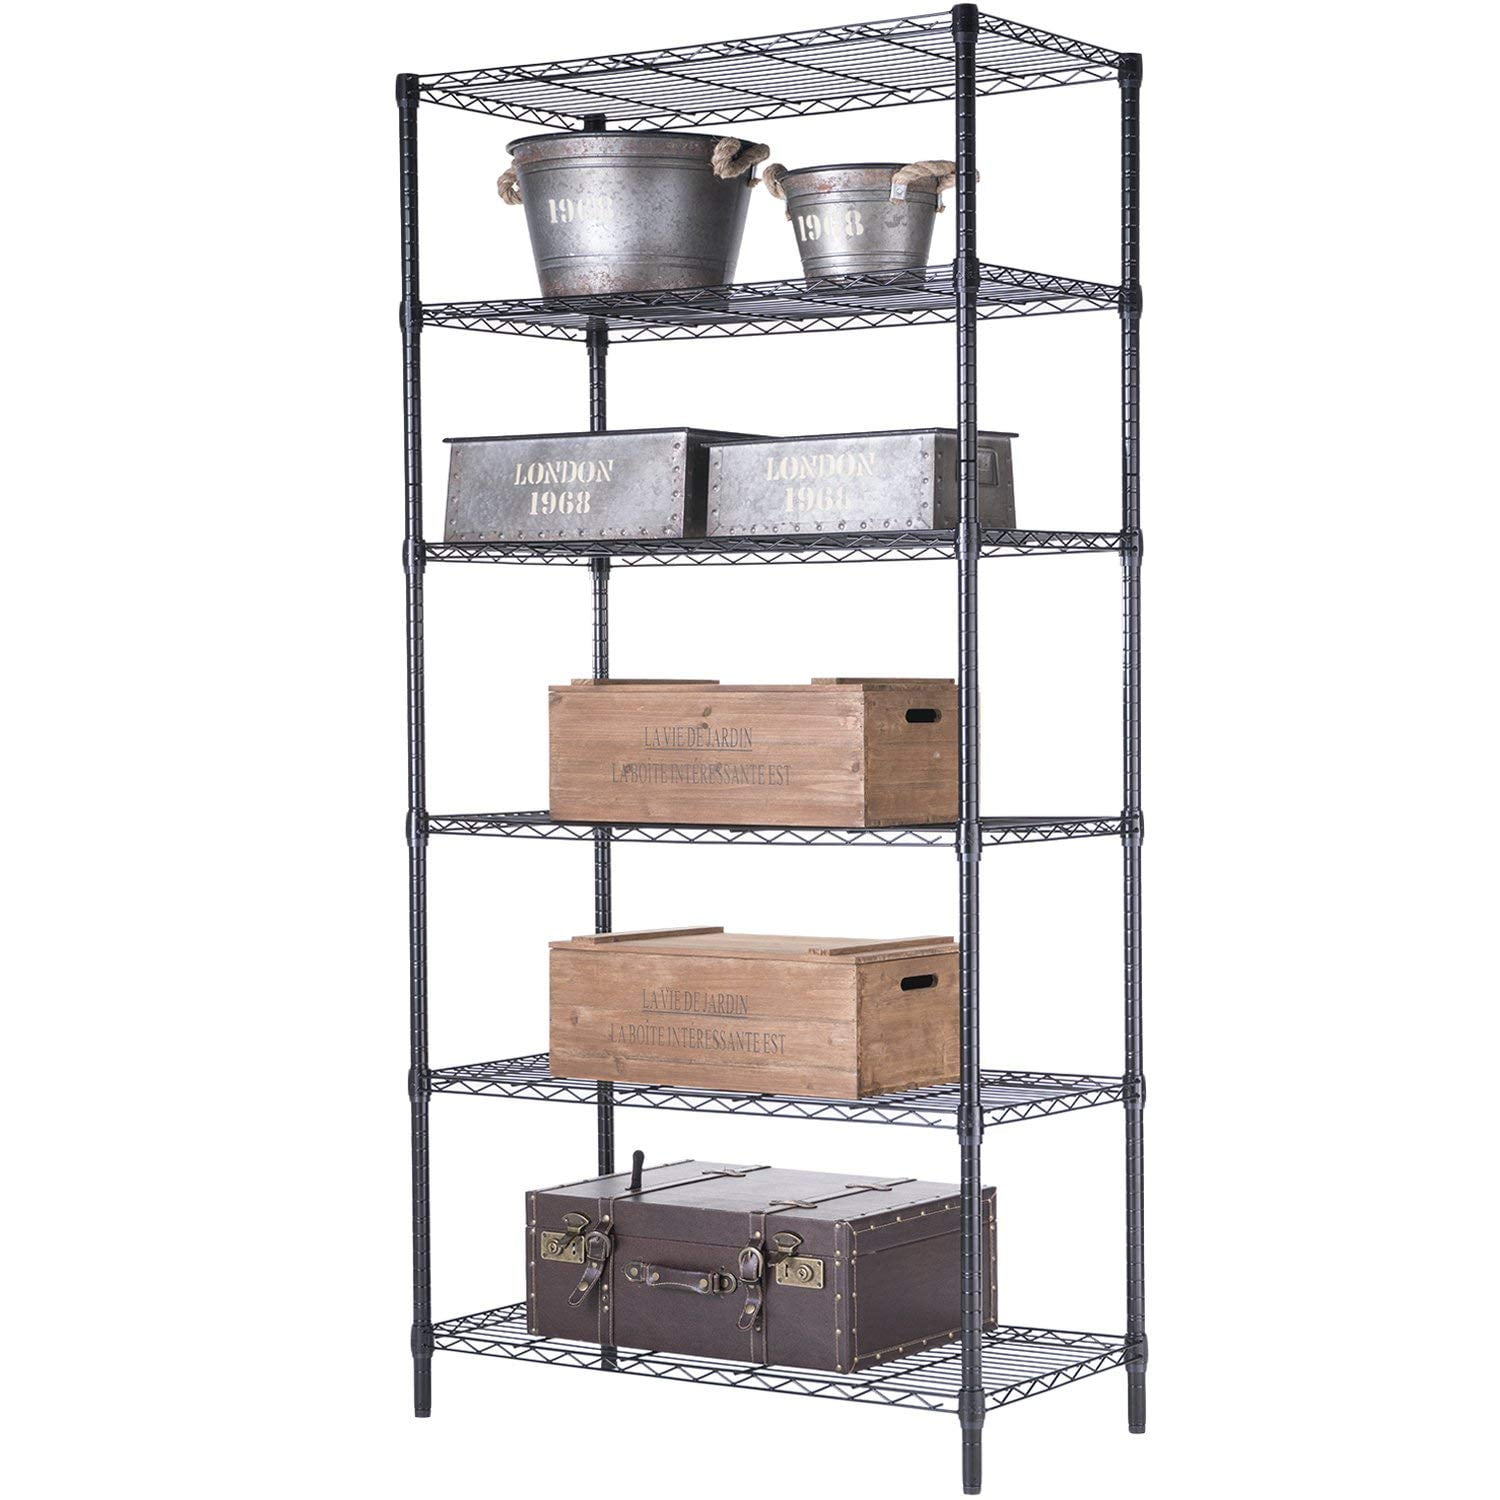 Details about   Devo 6-Shelf Adjustable Height Storage Shelf Standing Organizer Shelf B s a e 48 